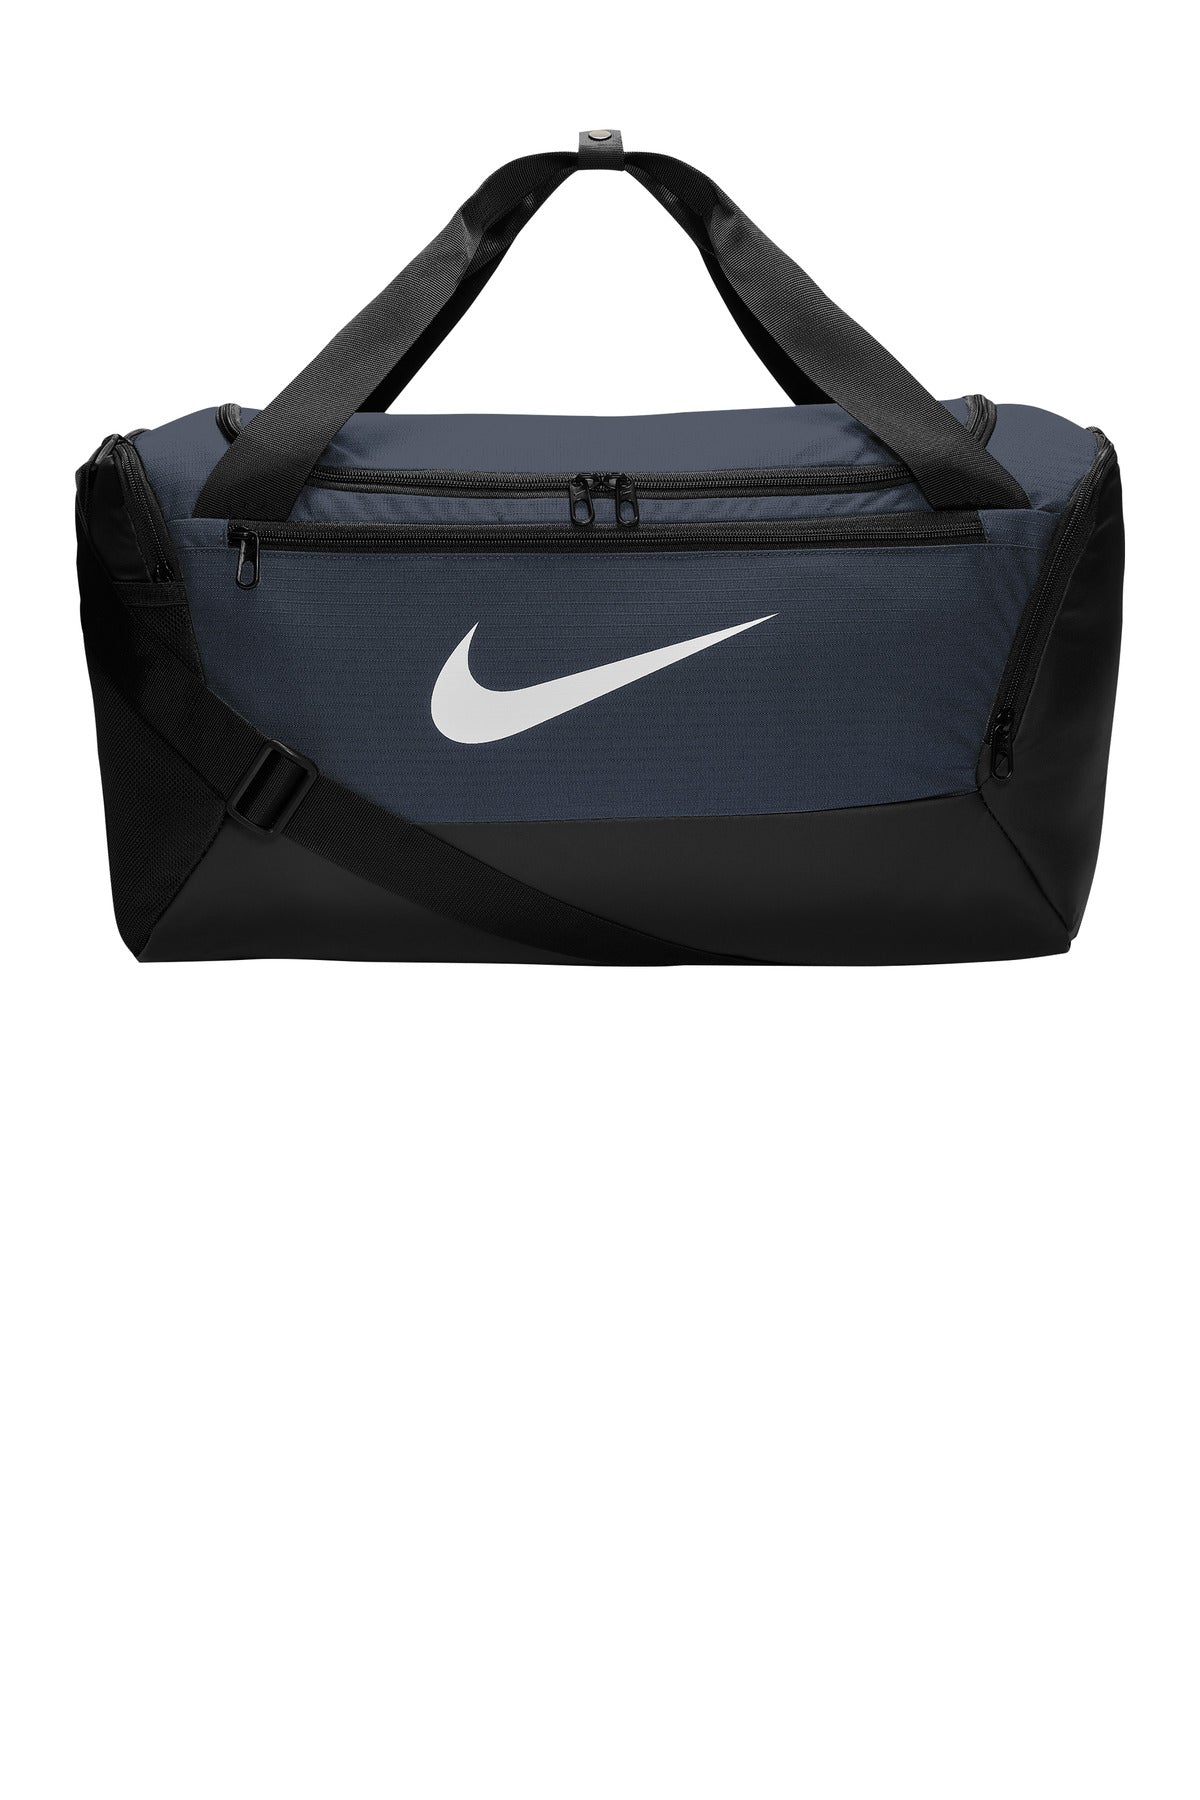 Bags Midnight Navy OSFA Nike